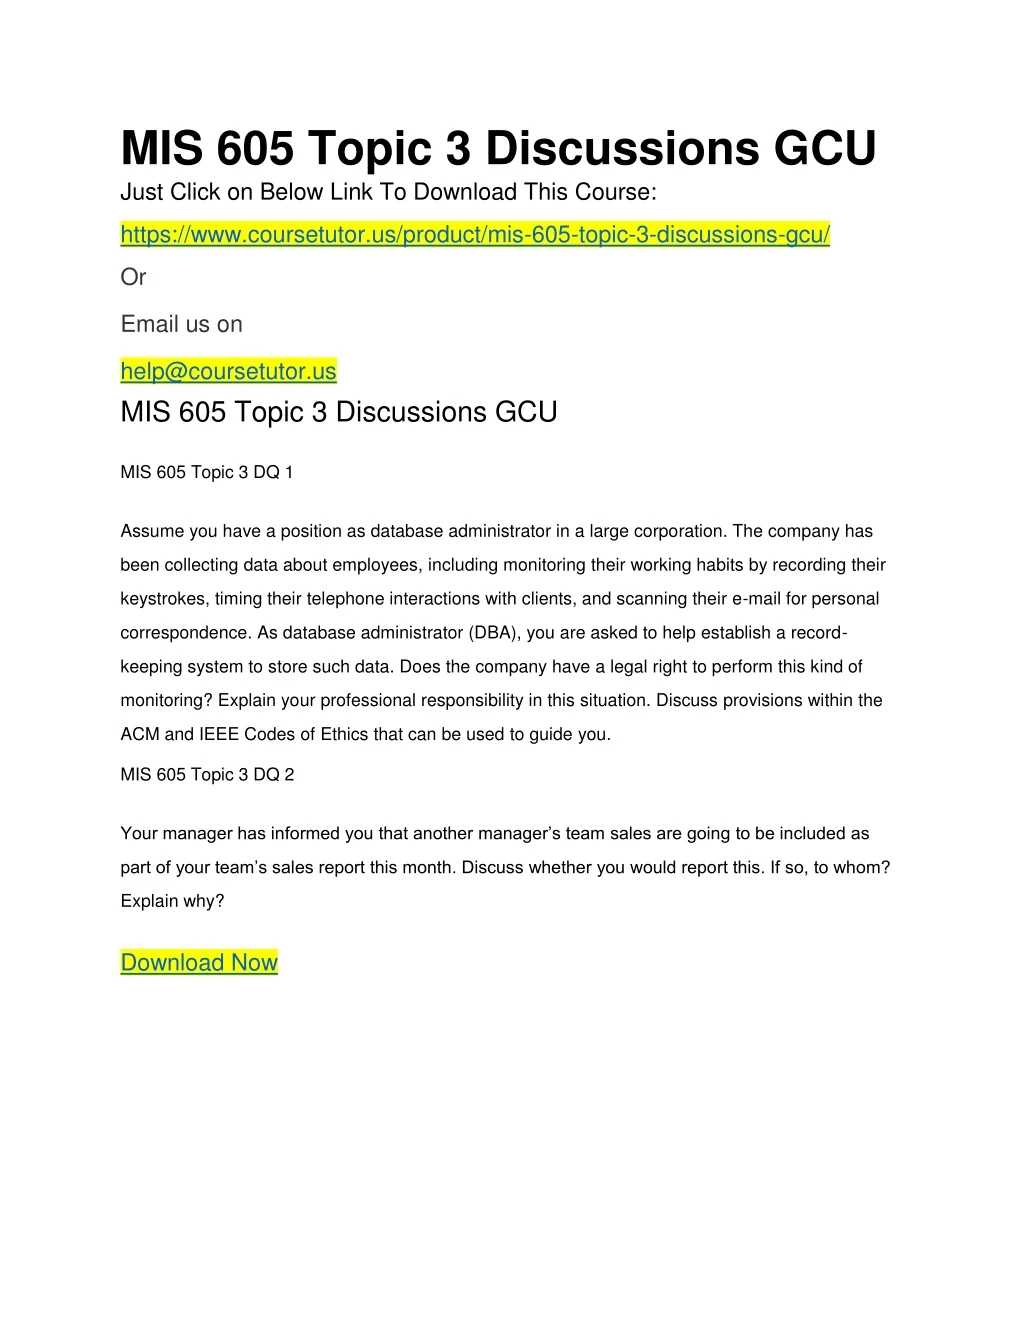 mis 605 topic 3 discussions gcu just click